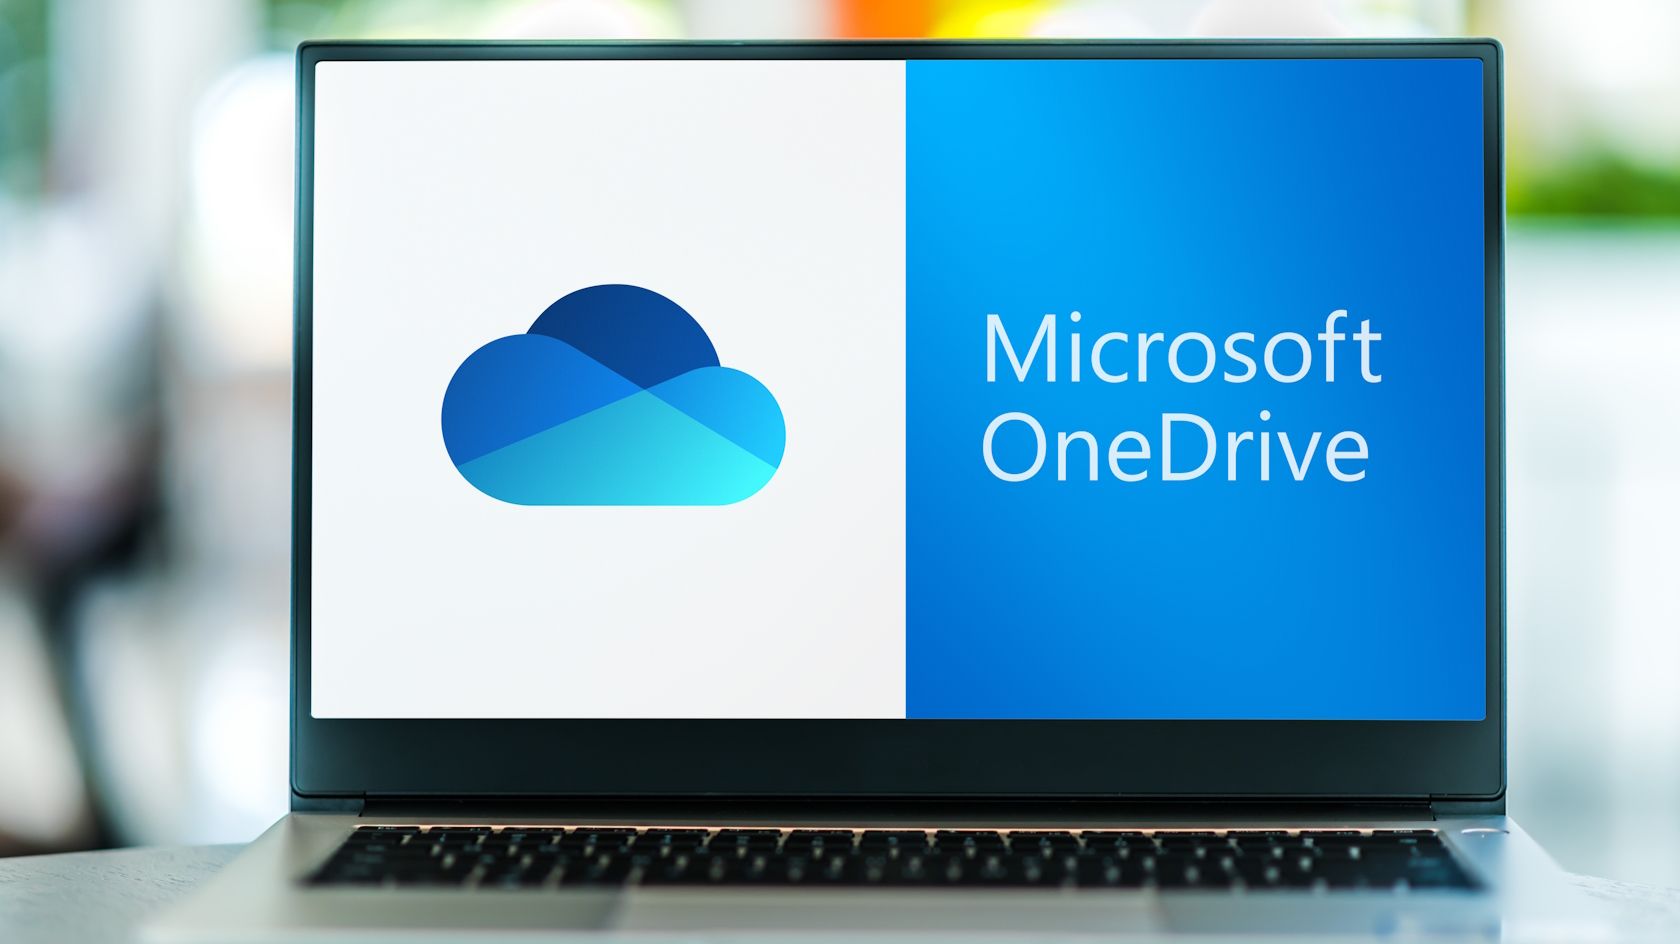 Microsoft OneDrive on a laptop